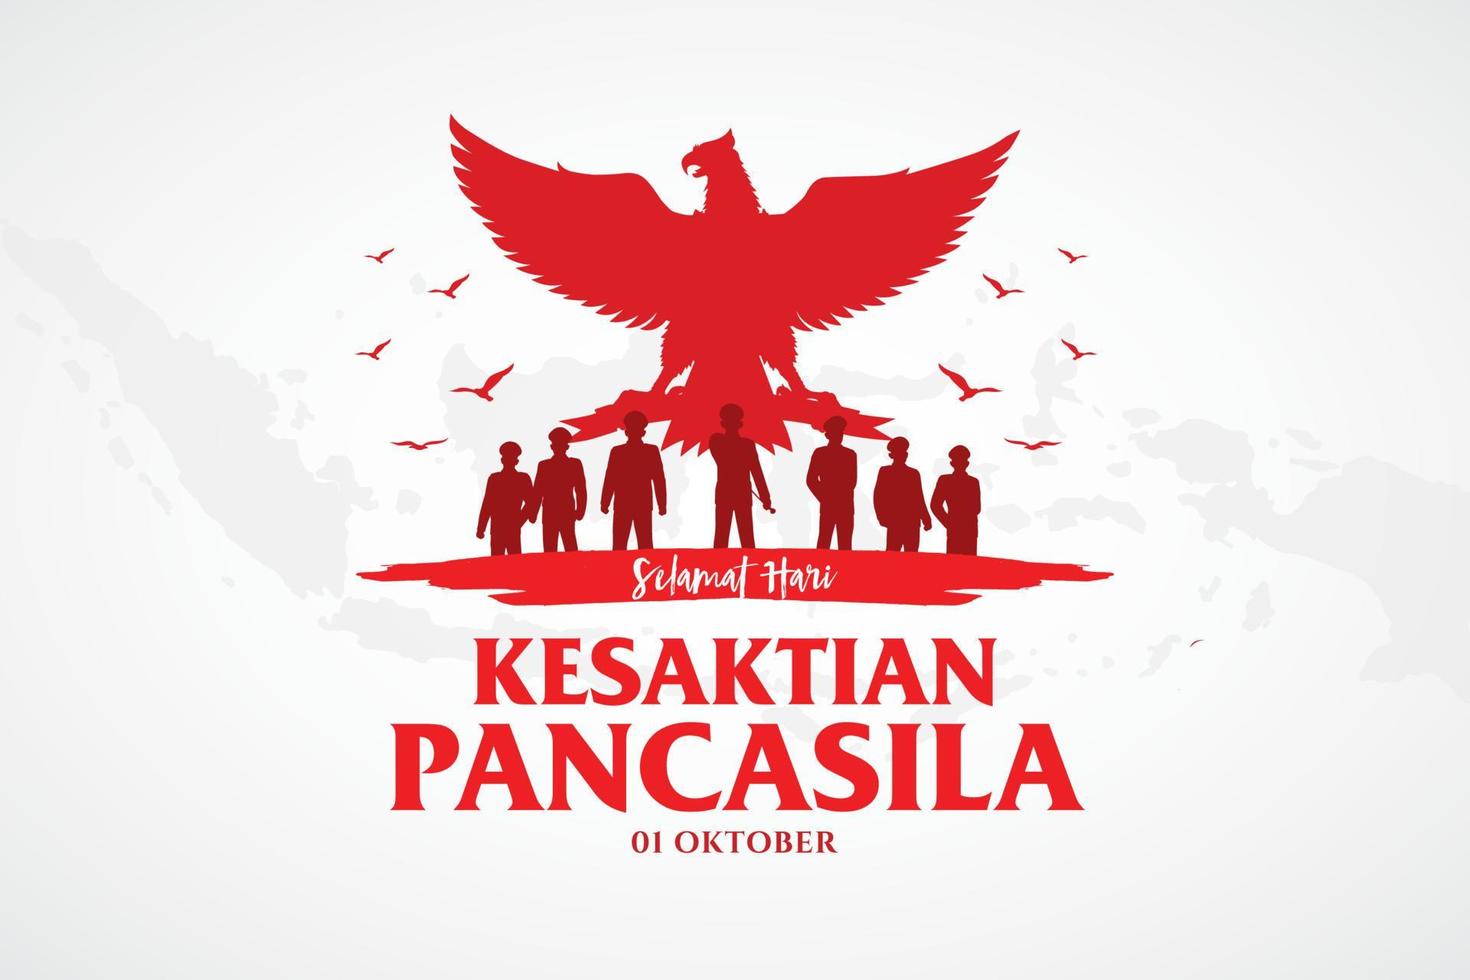 indonesiska Semester pancasila dag illustration.translation, oktober 01, åminnelse av de pancasila helighet dag vektor